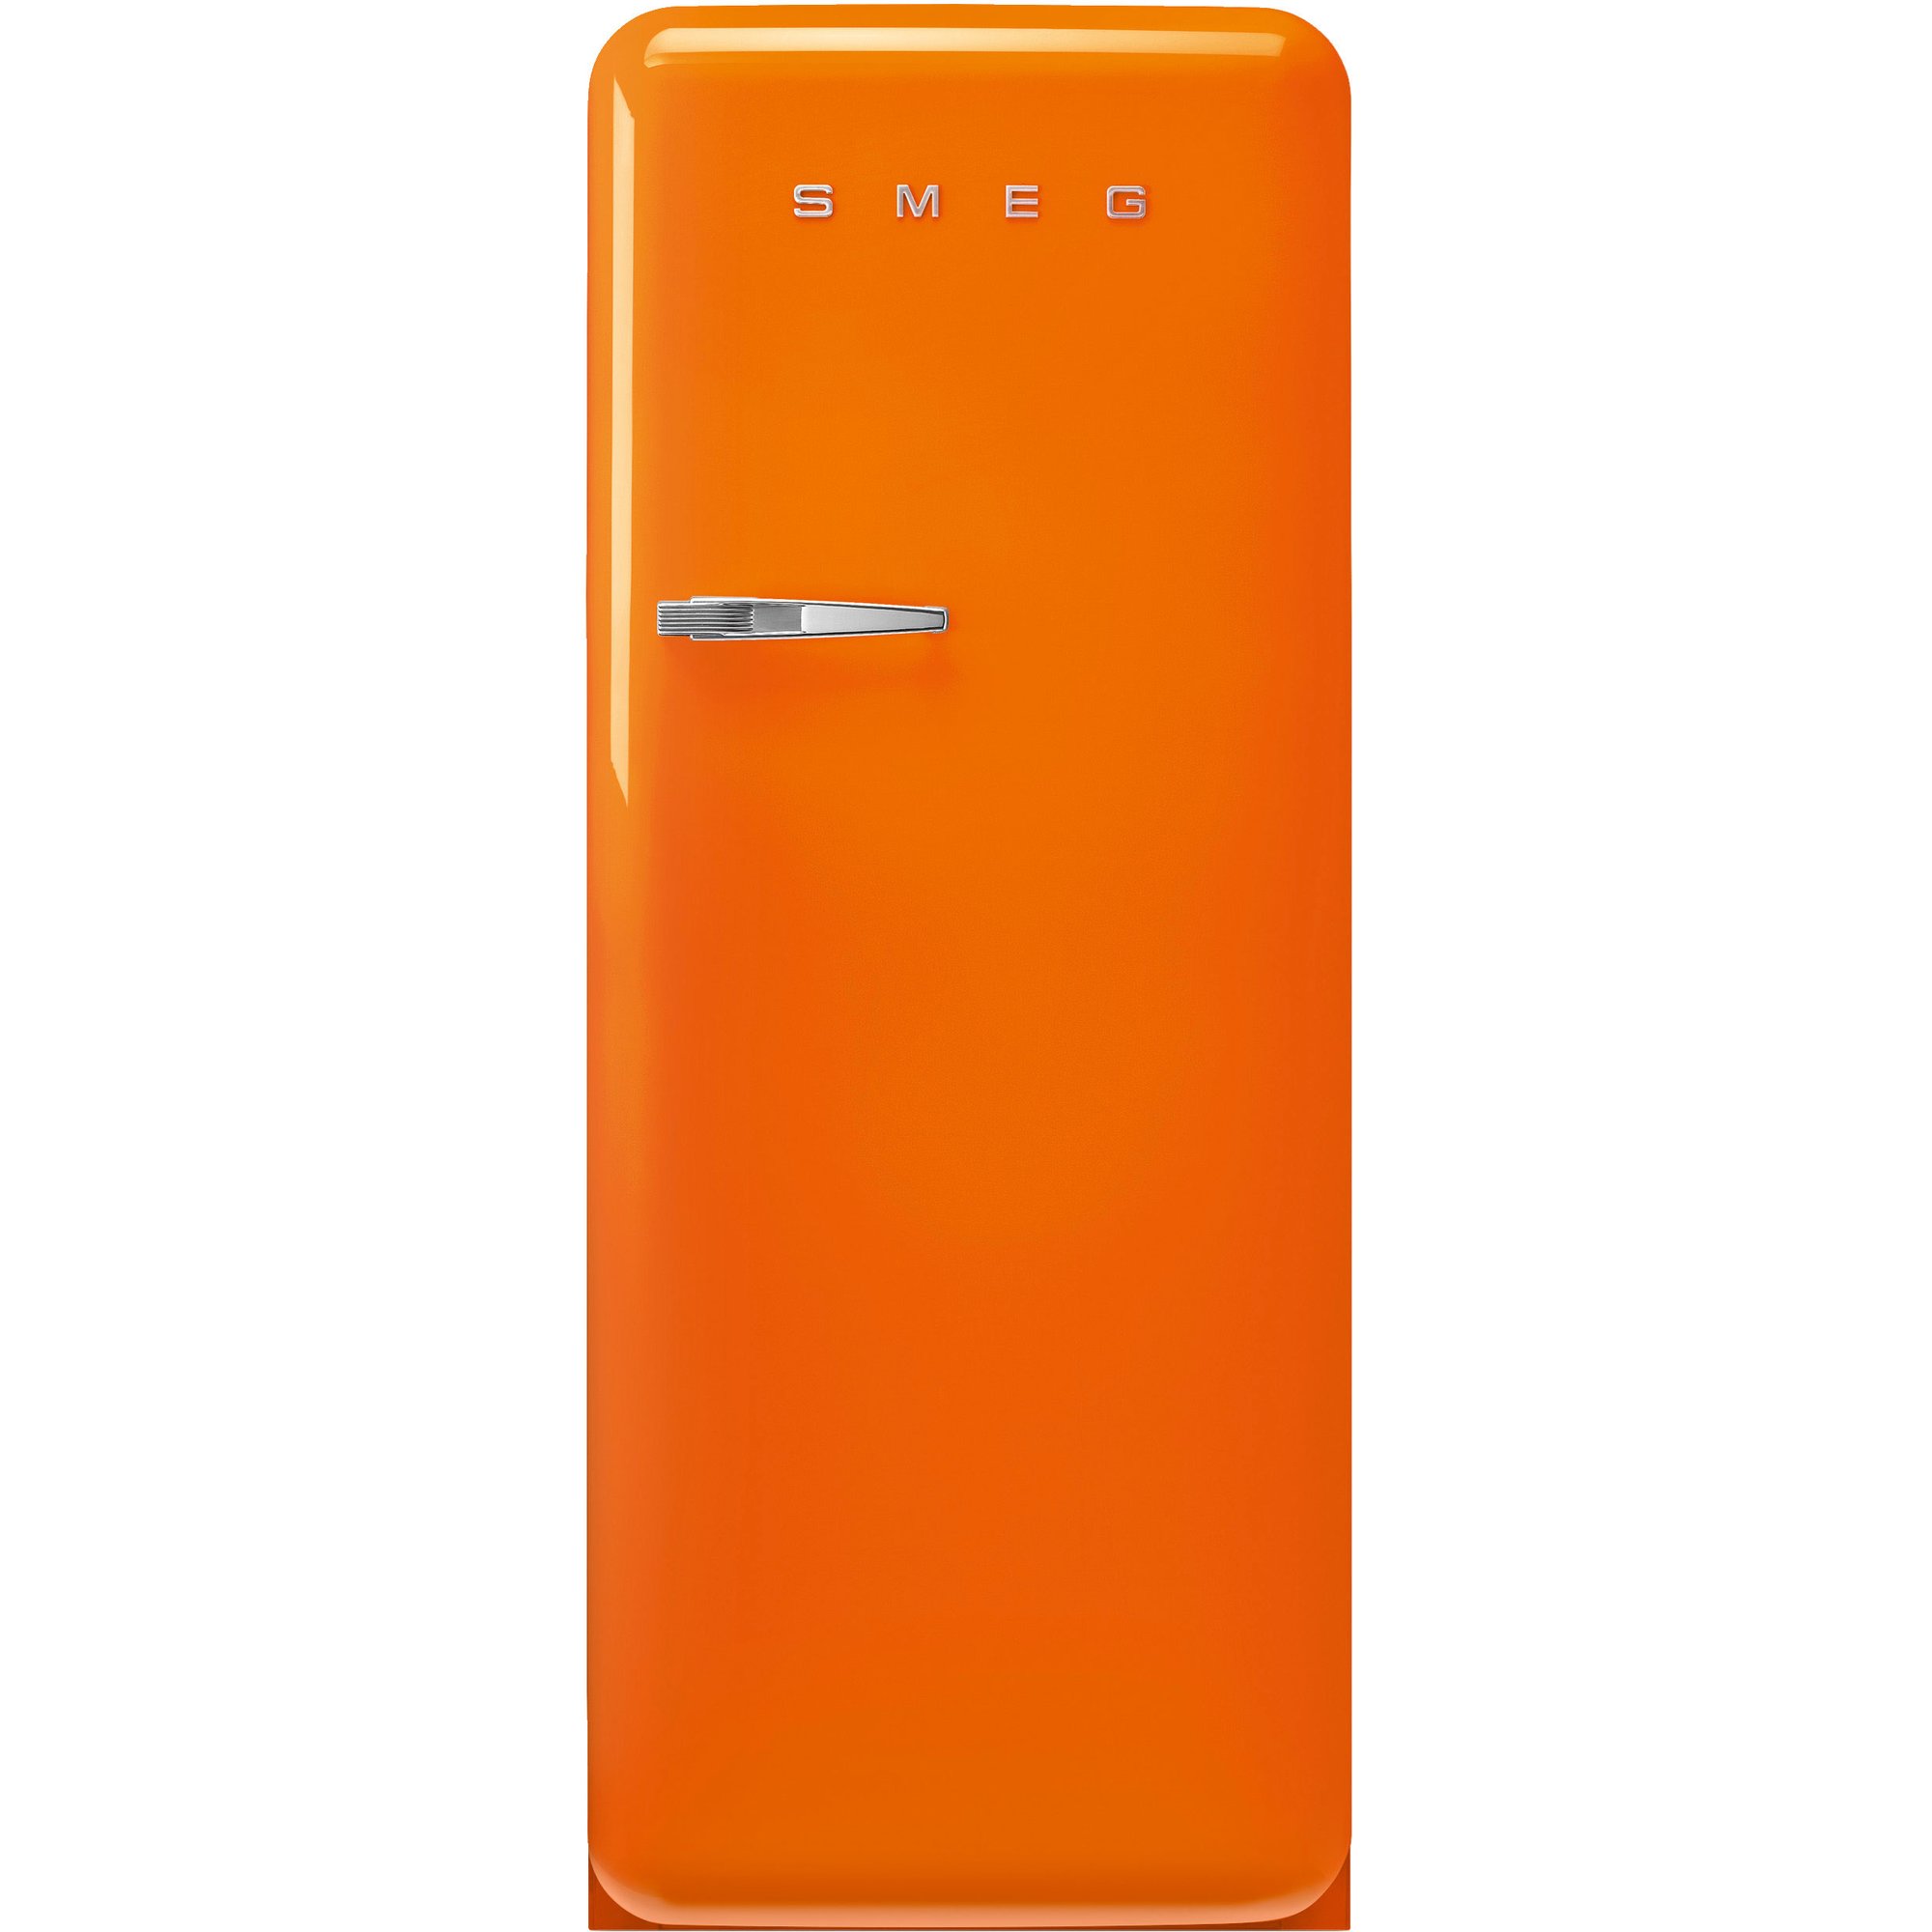 FAB28ROR5 Kjøleskap Orange